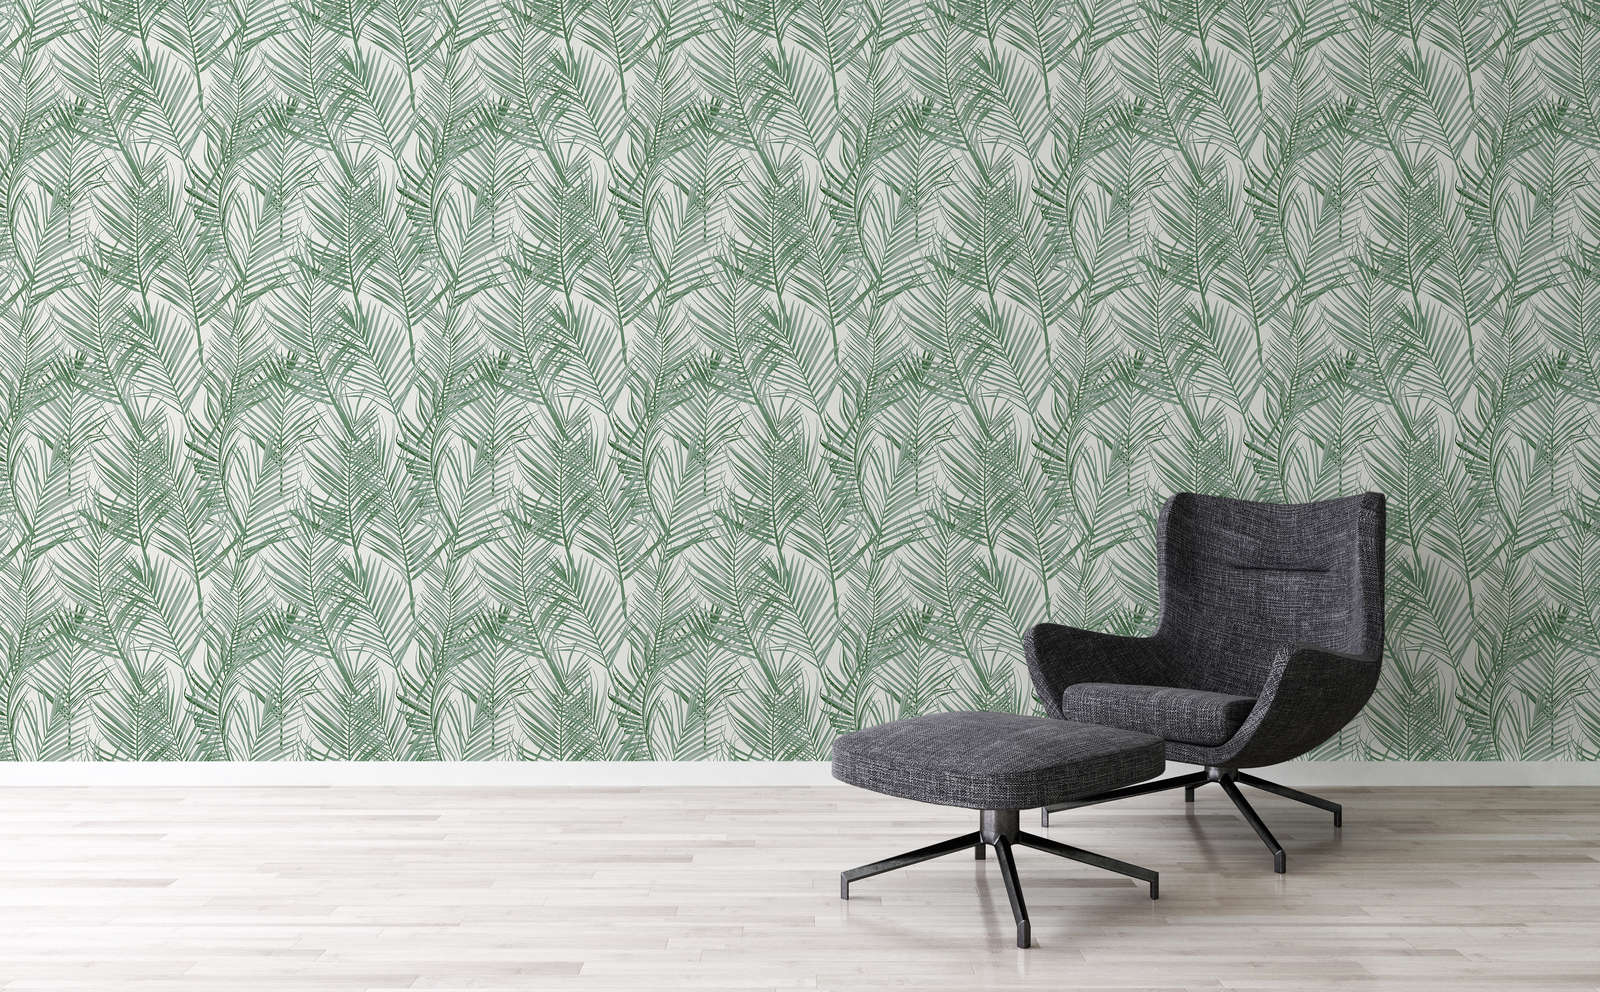             Vliestapete mit großflächigem Palmen Muster – Grün, Weiß
        